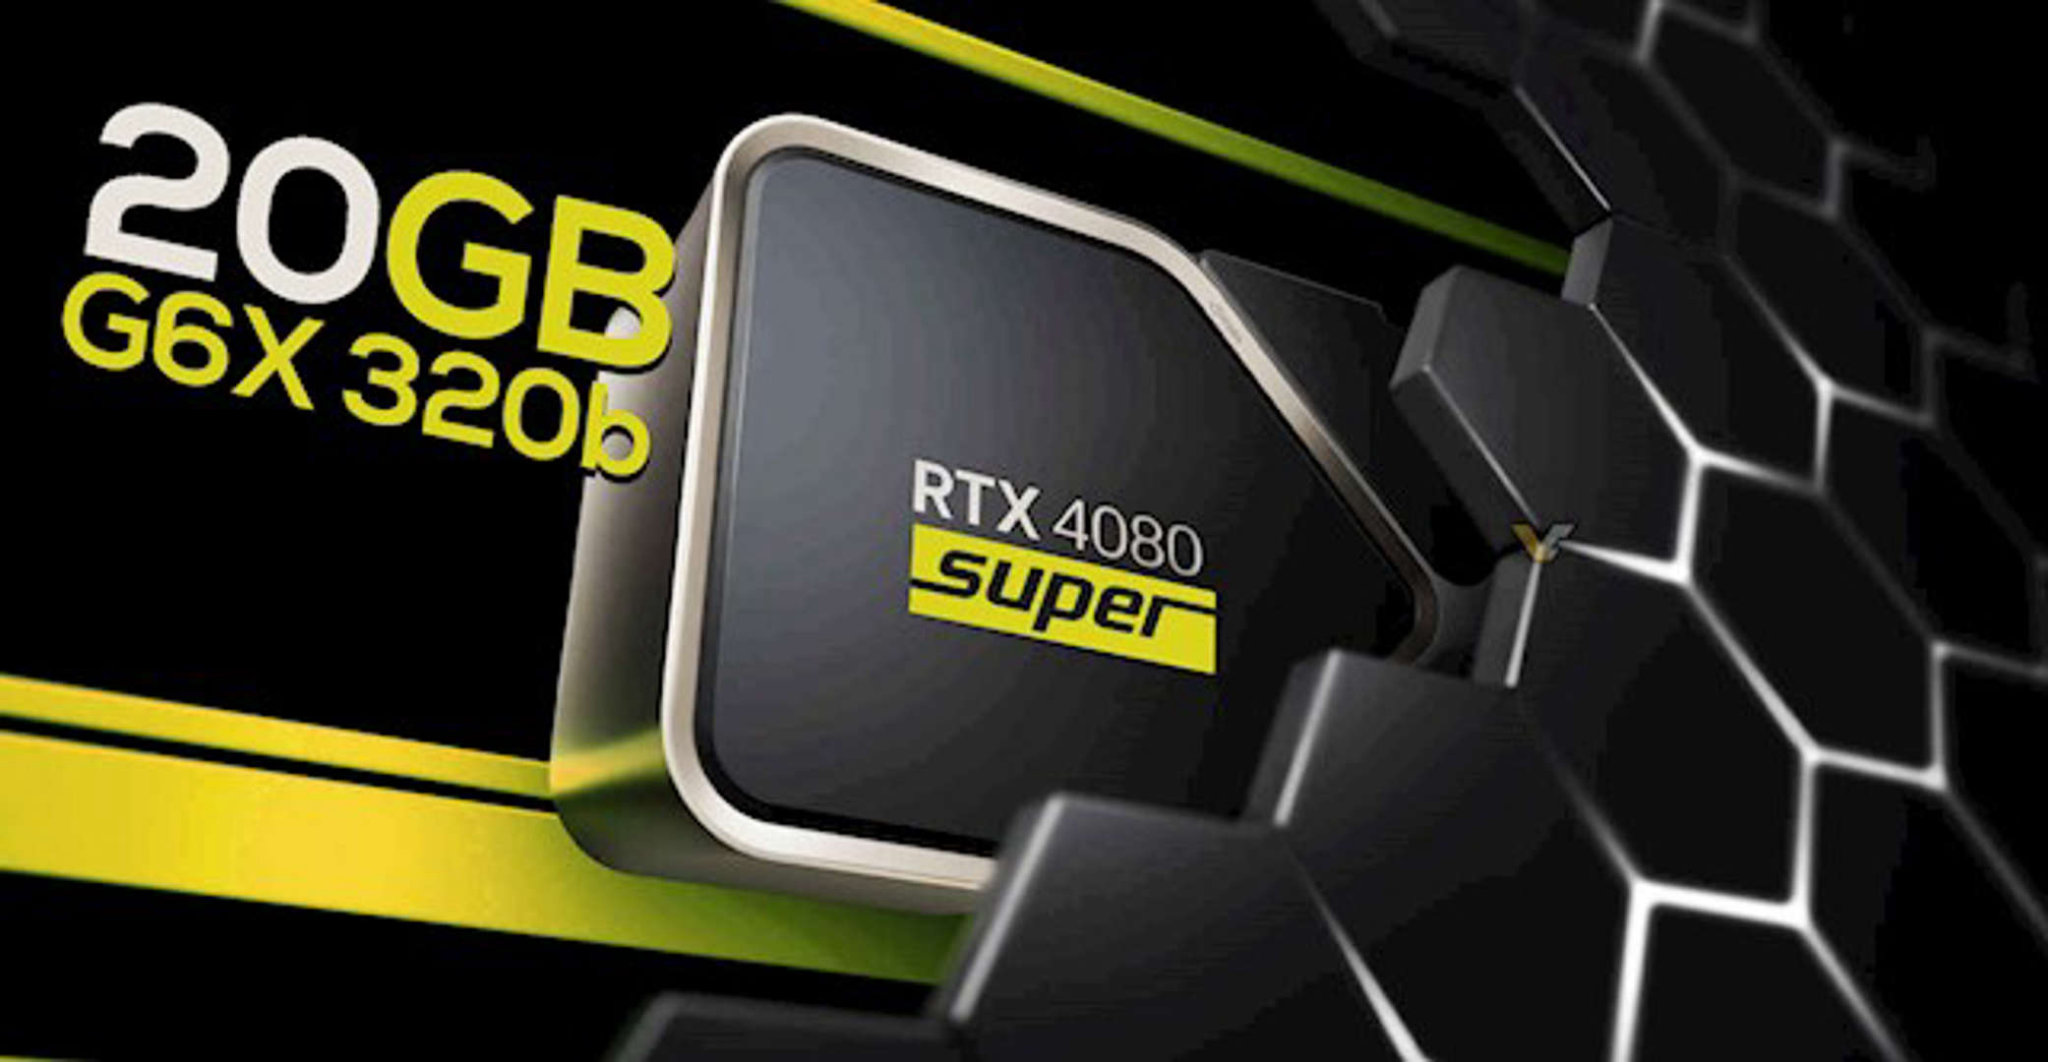 RTX 4080 SUPER Conscience Upgrade: 20GB Big Display Storage Cool